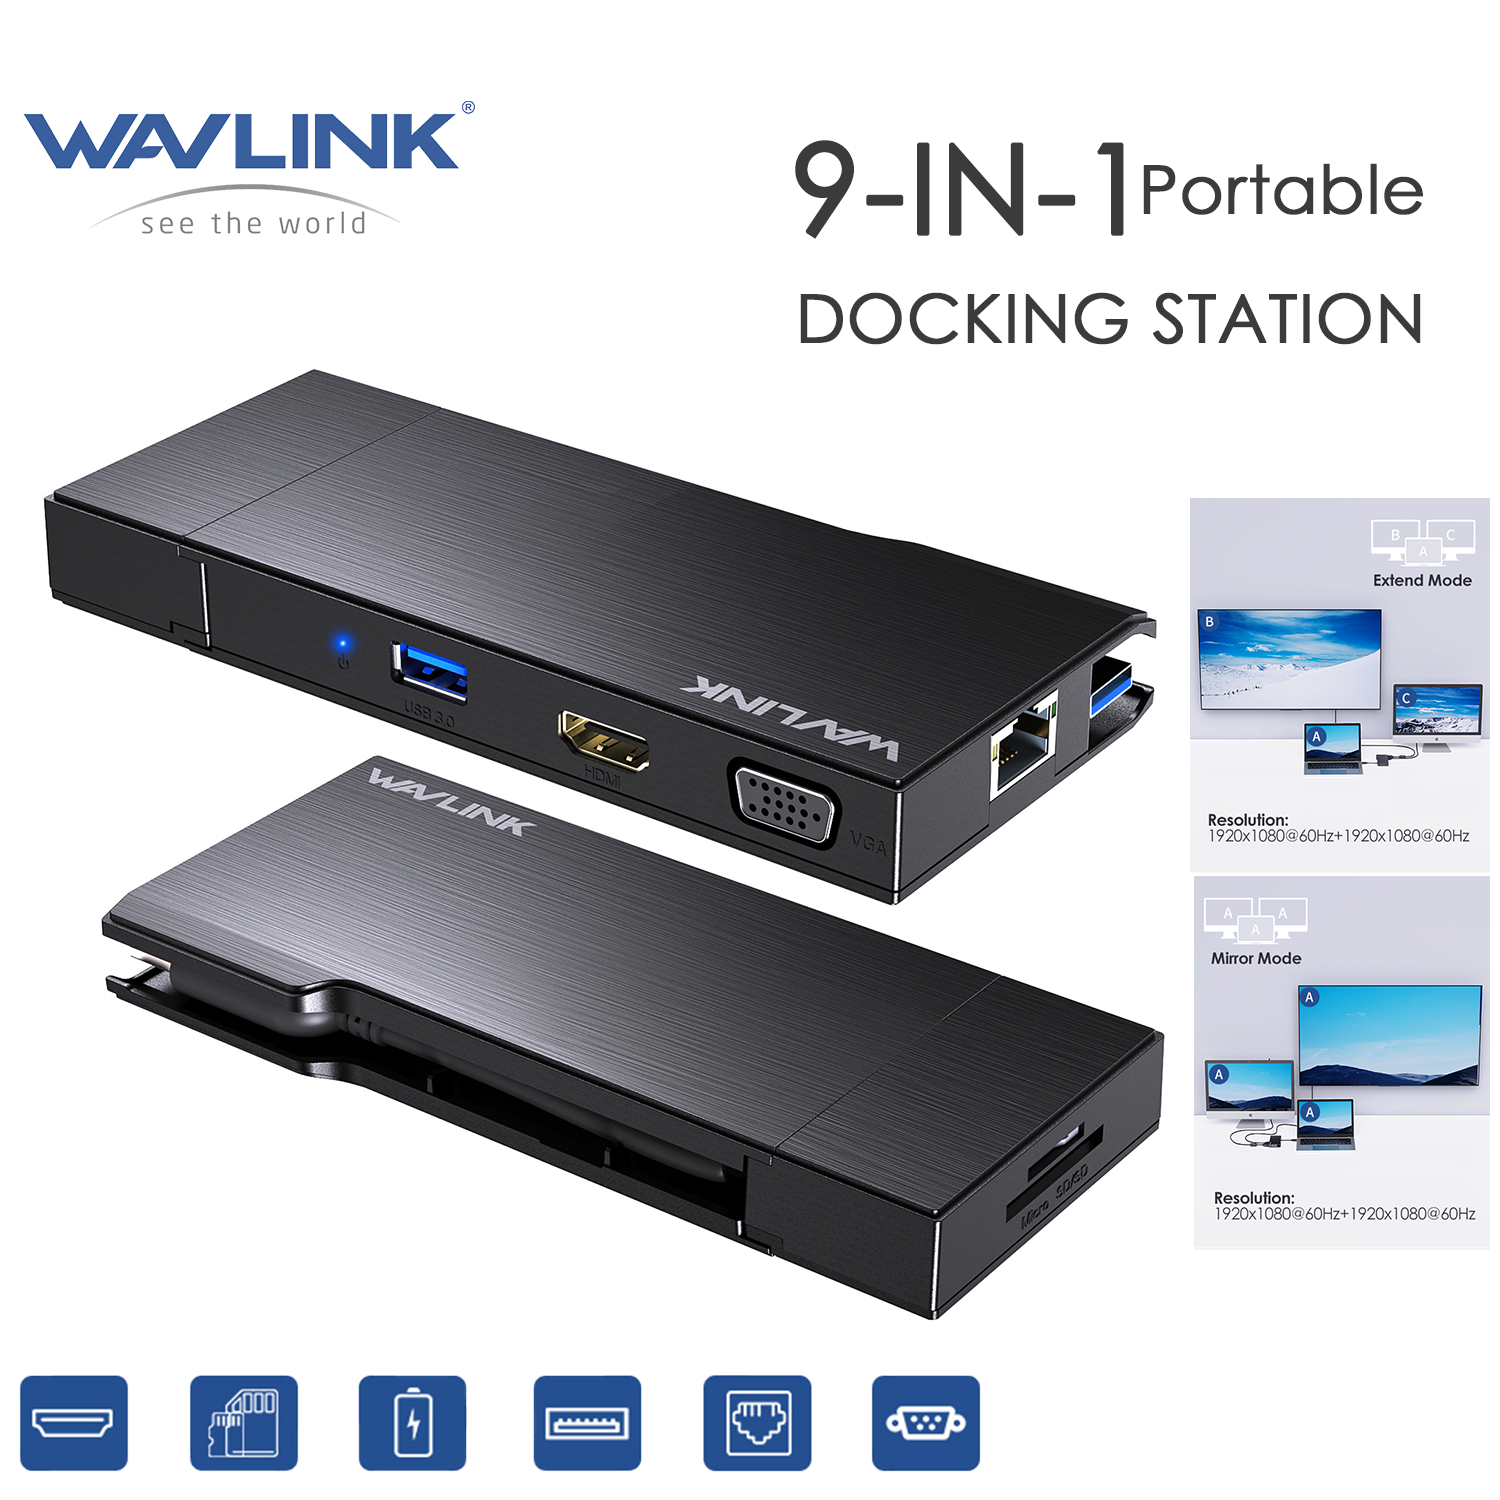 WAVLINK USB3.0 Travel Mini Dock, 9-in-1 Portable DisplayLink Dock